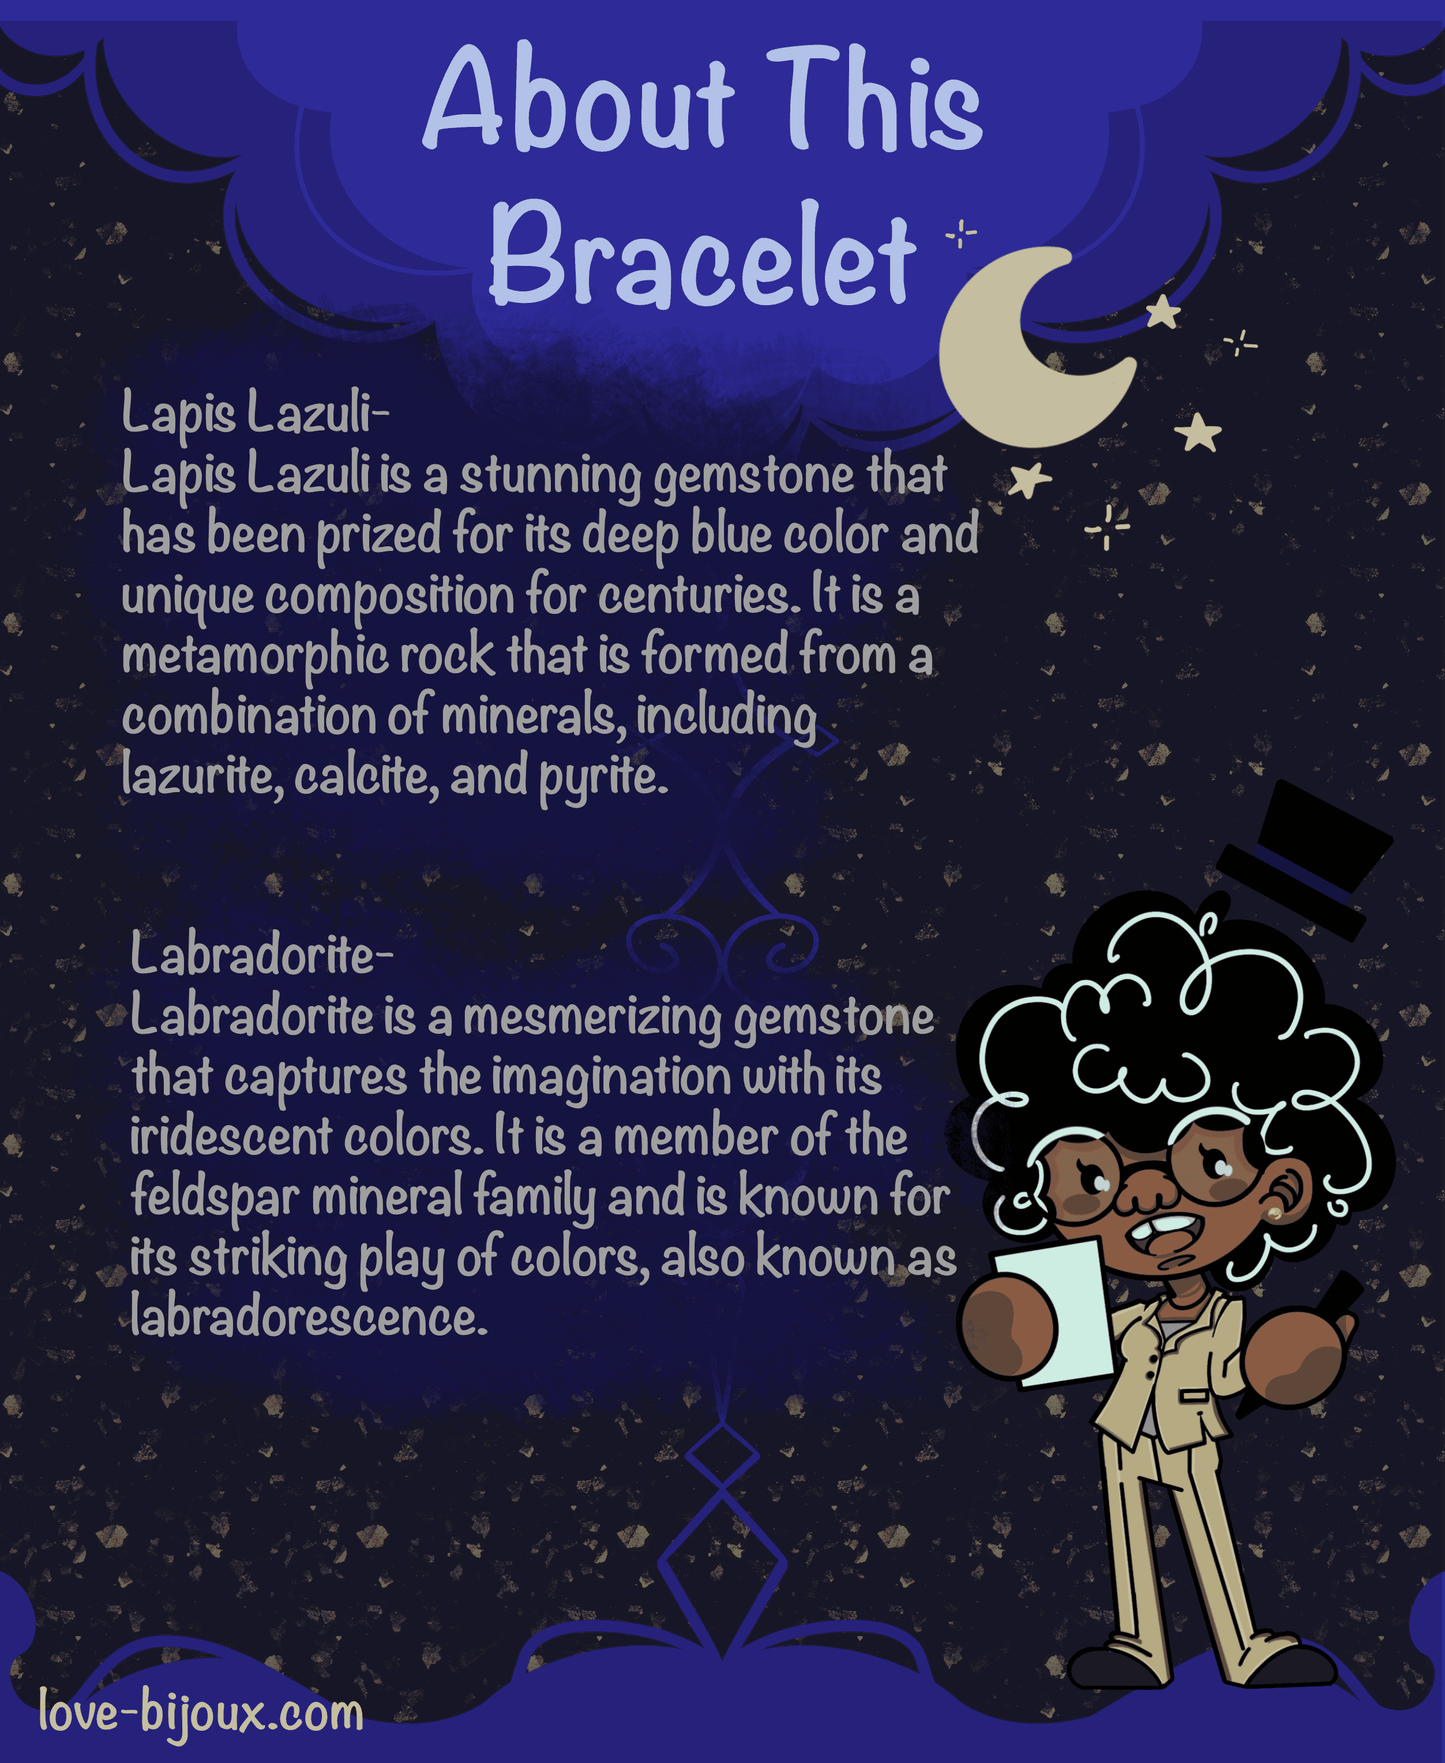 12 O’Clock (Nighttime) Bracelet